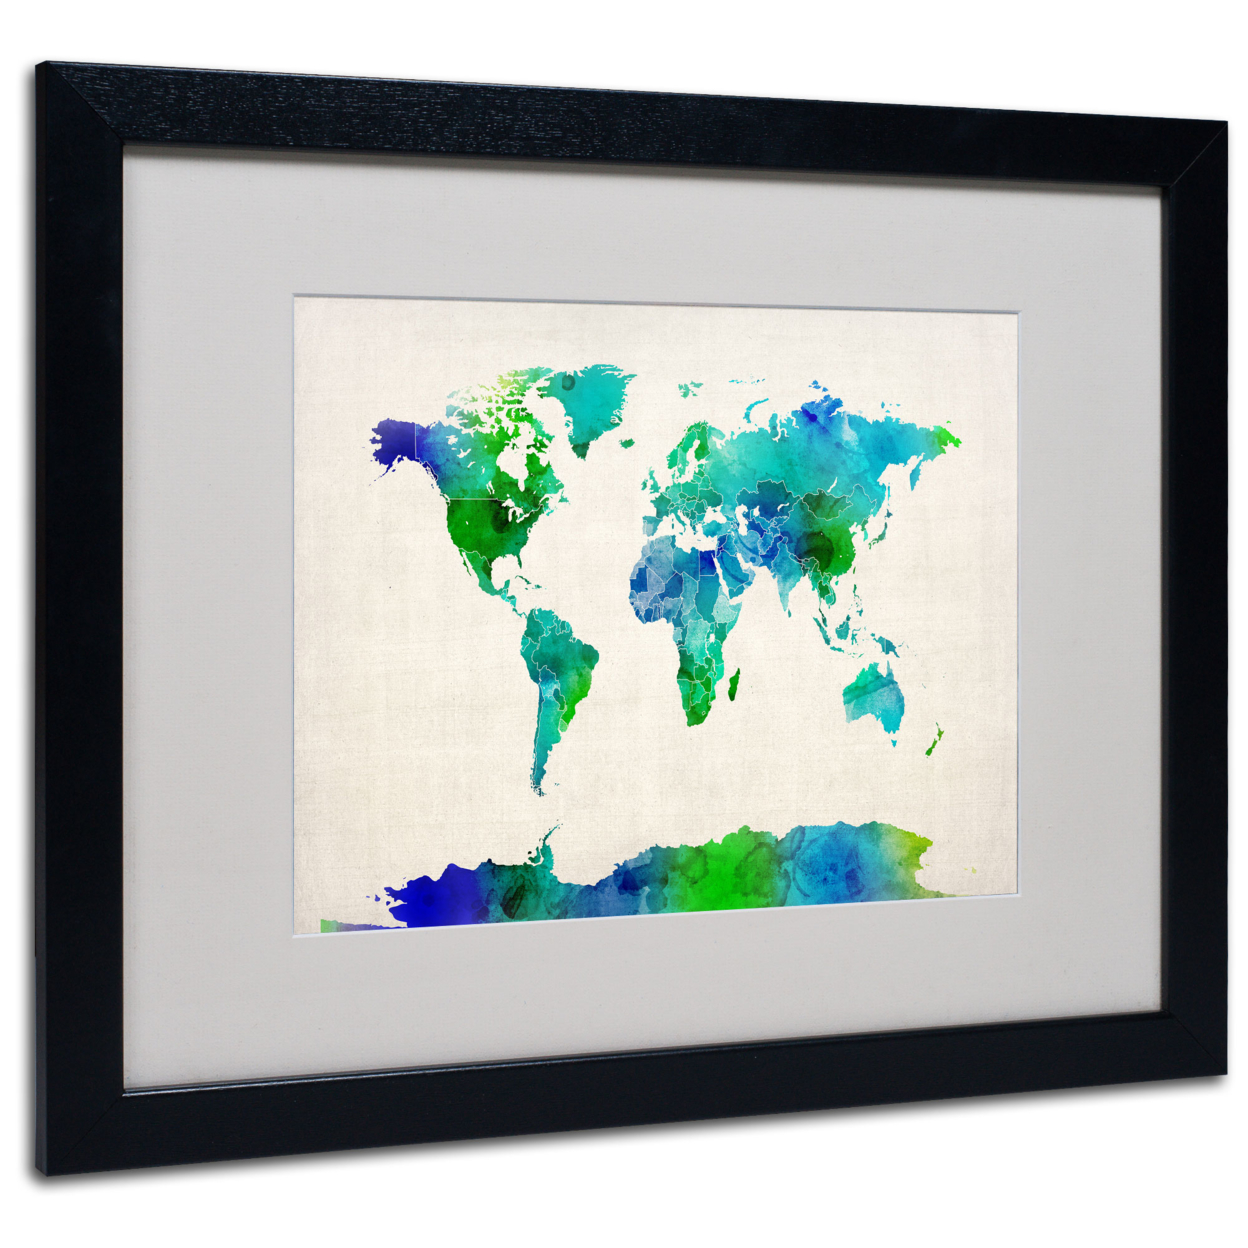 Michael Tompsett 'World Map Watercolor' Black Wooden Framed Art 18 X 22 Inches